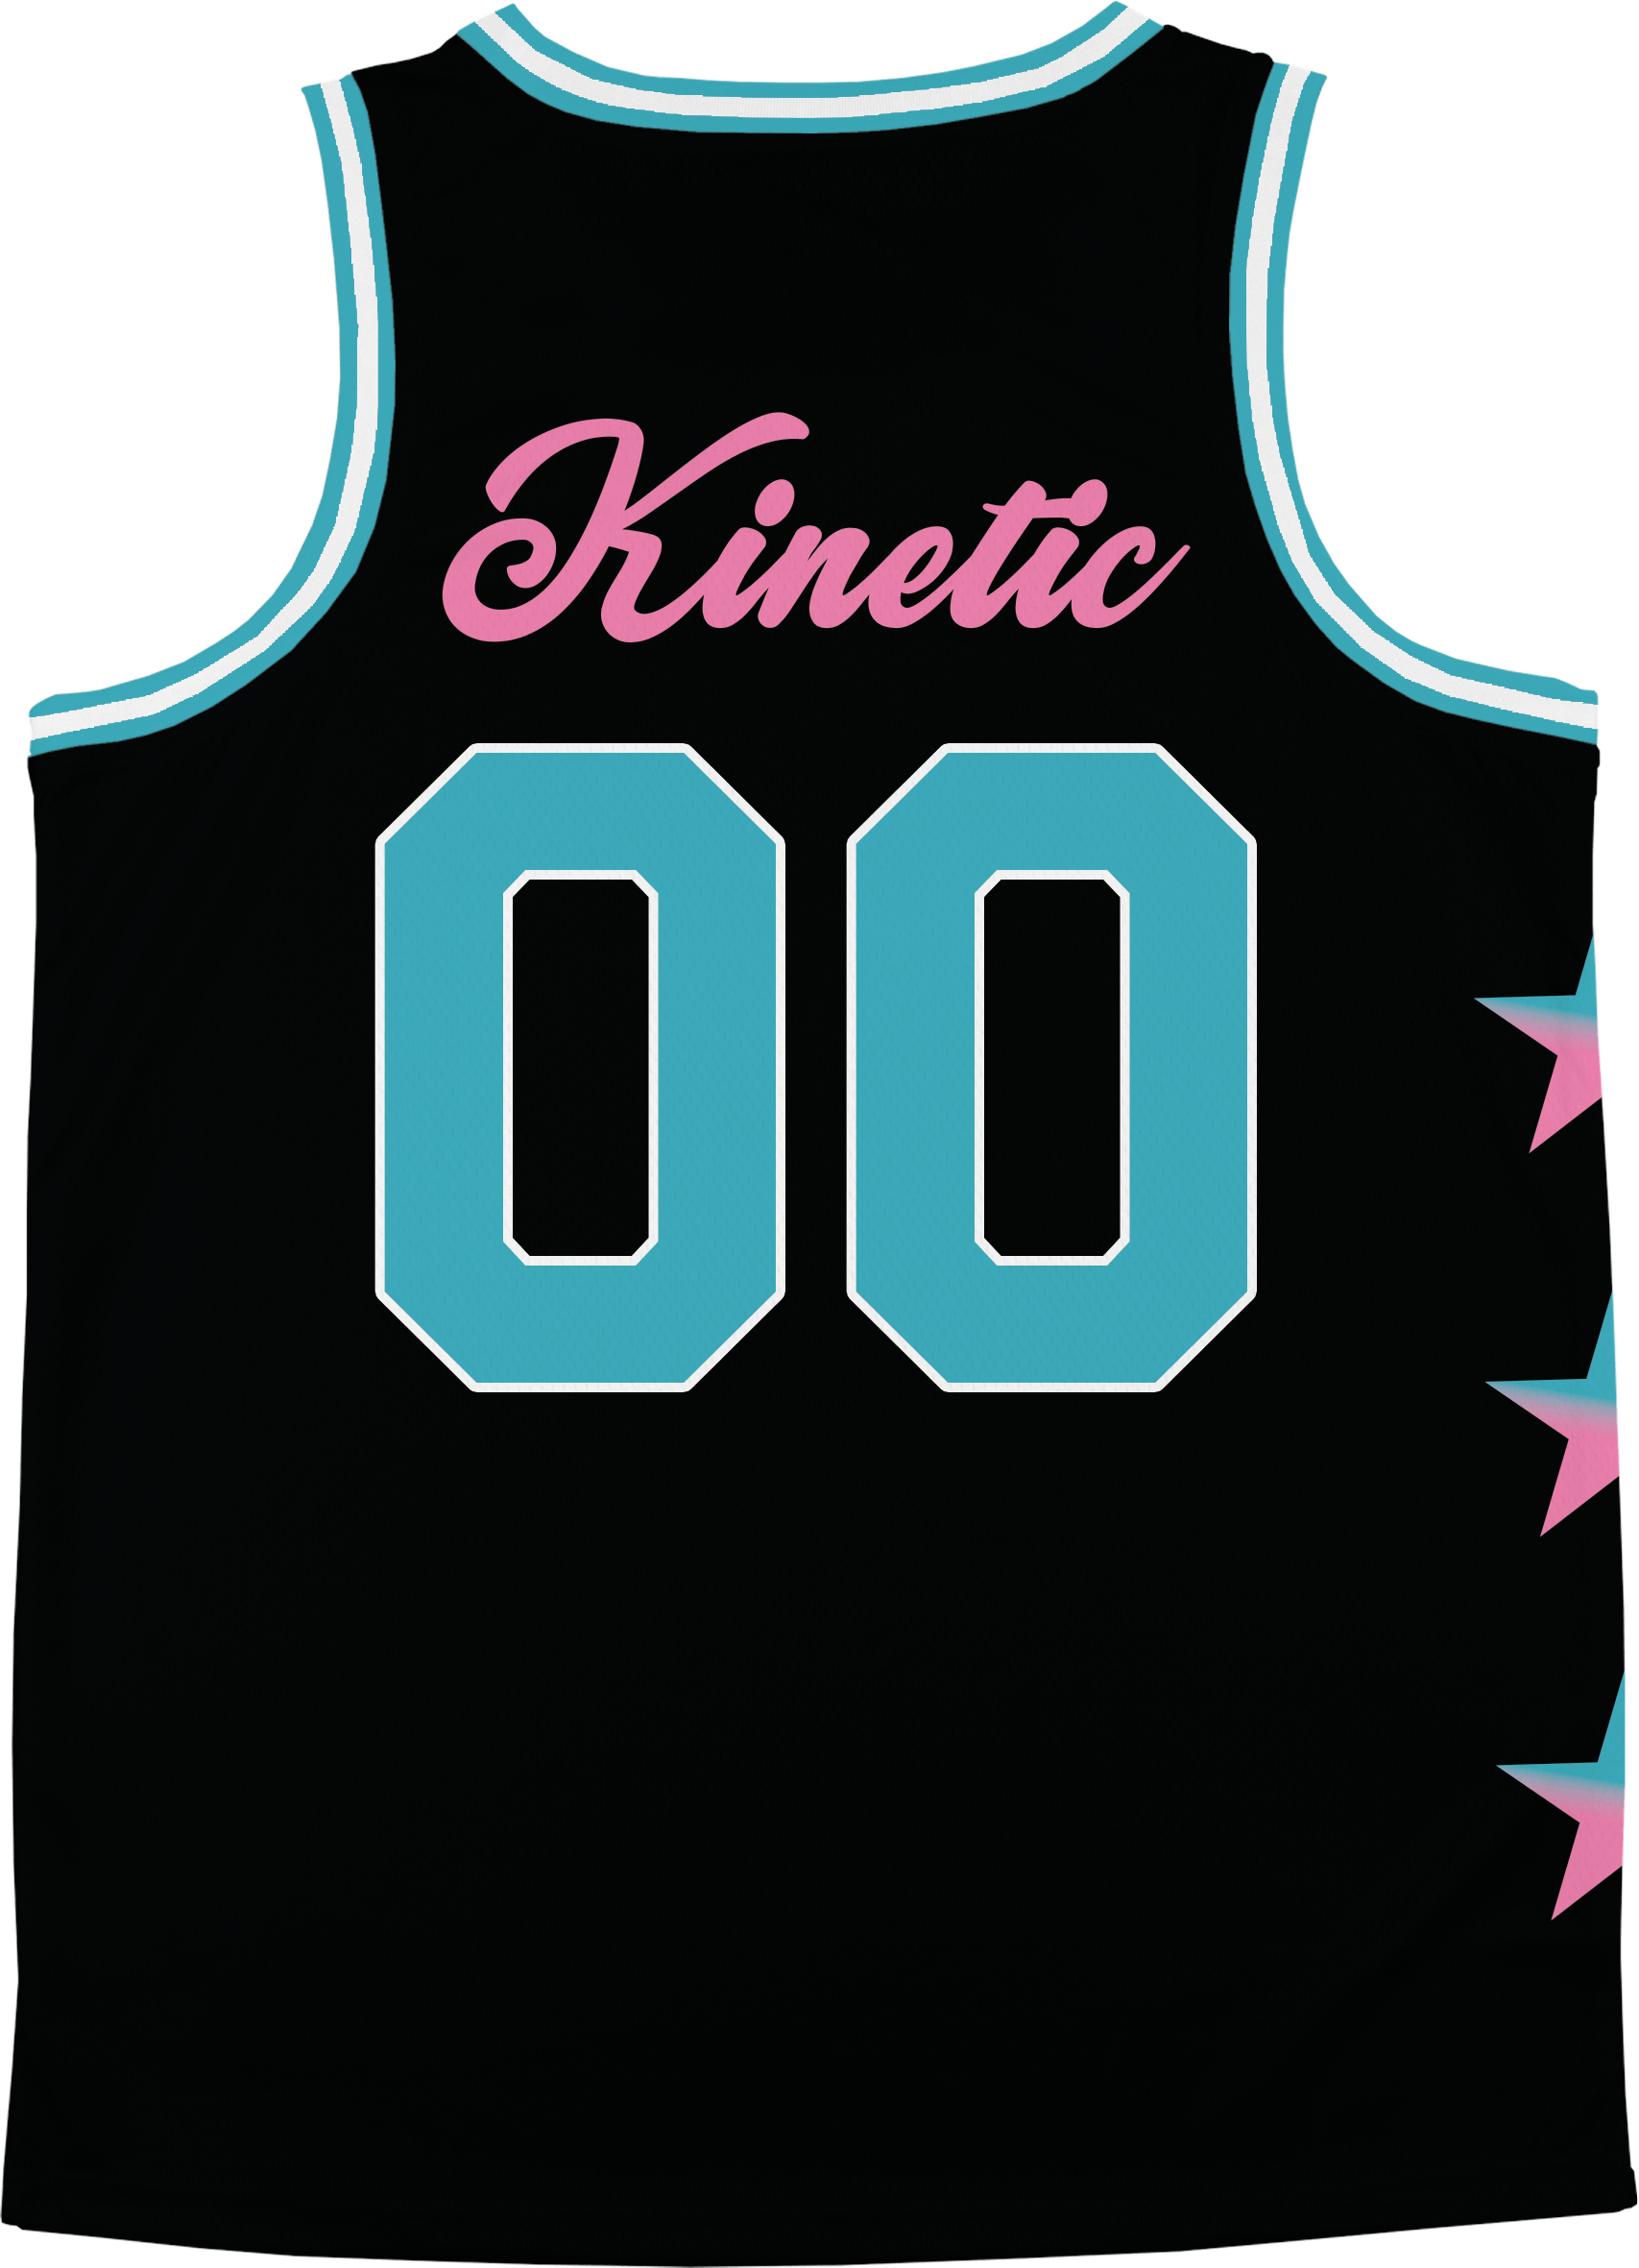 Pi Kappa Alpha - Cotton Candy Basketball Jersey - Kinetic Society